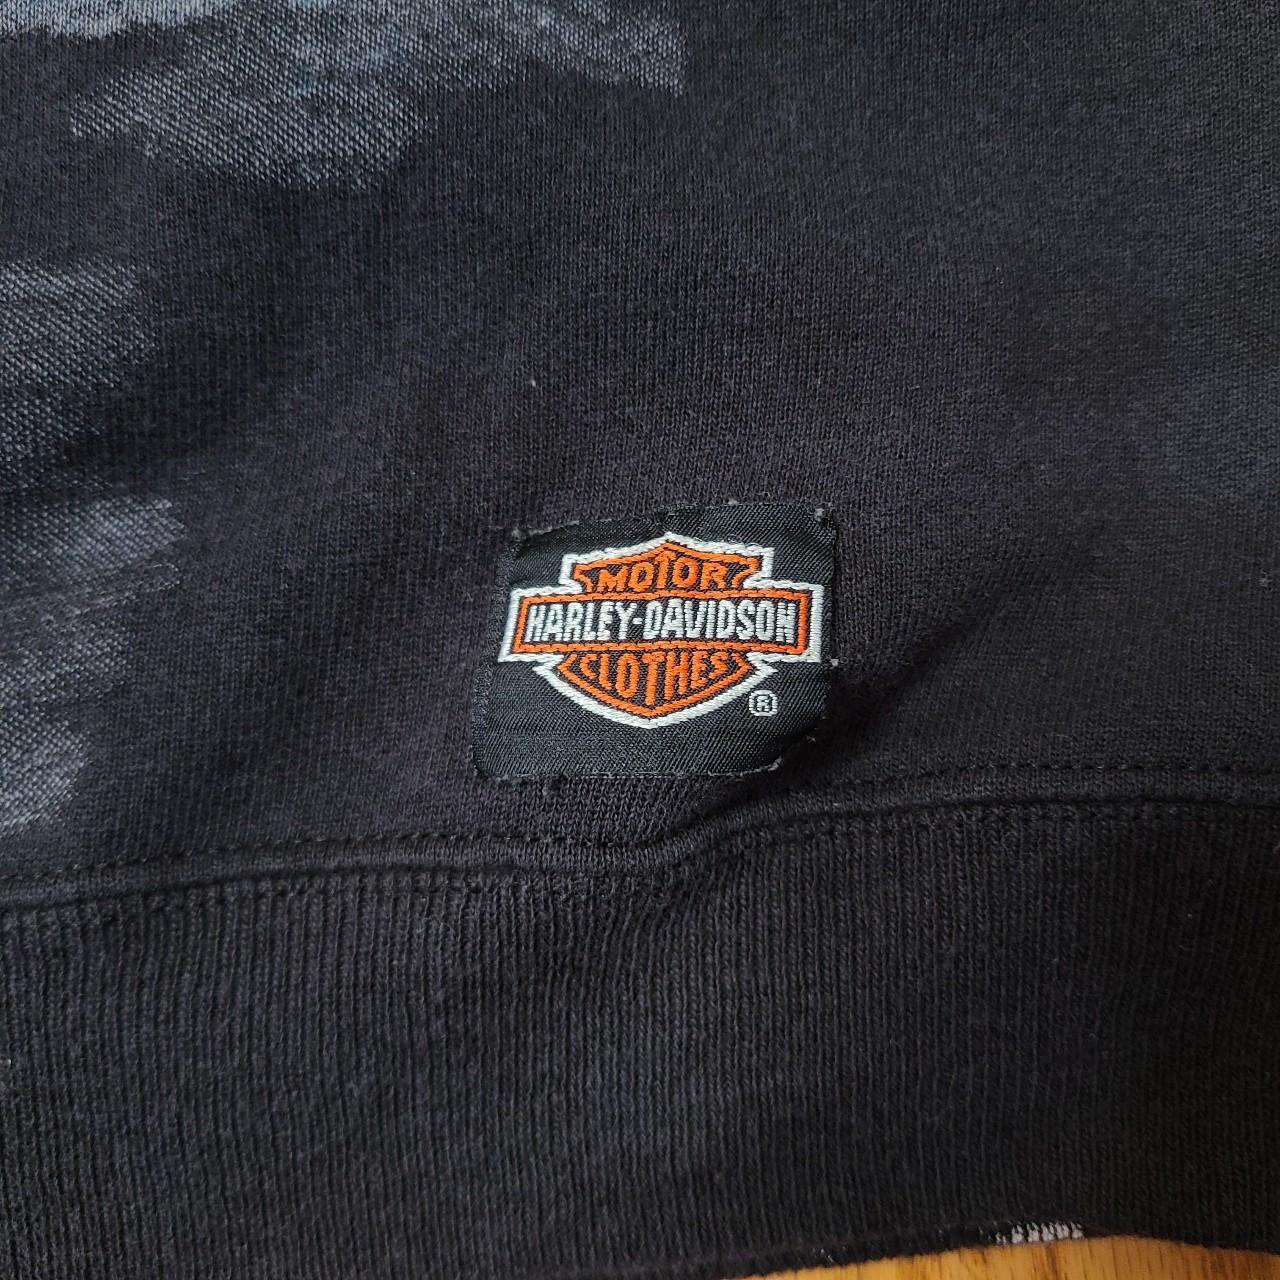 True Vintage 90s Harley Davidson All Over Print Crewneck Sweatshirt